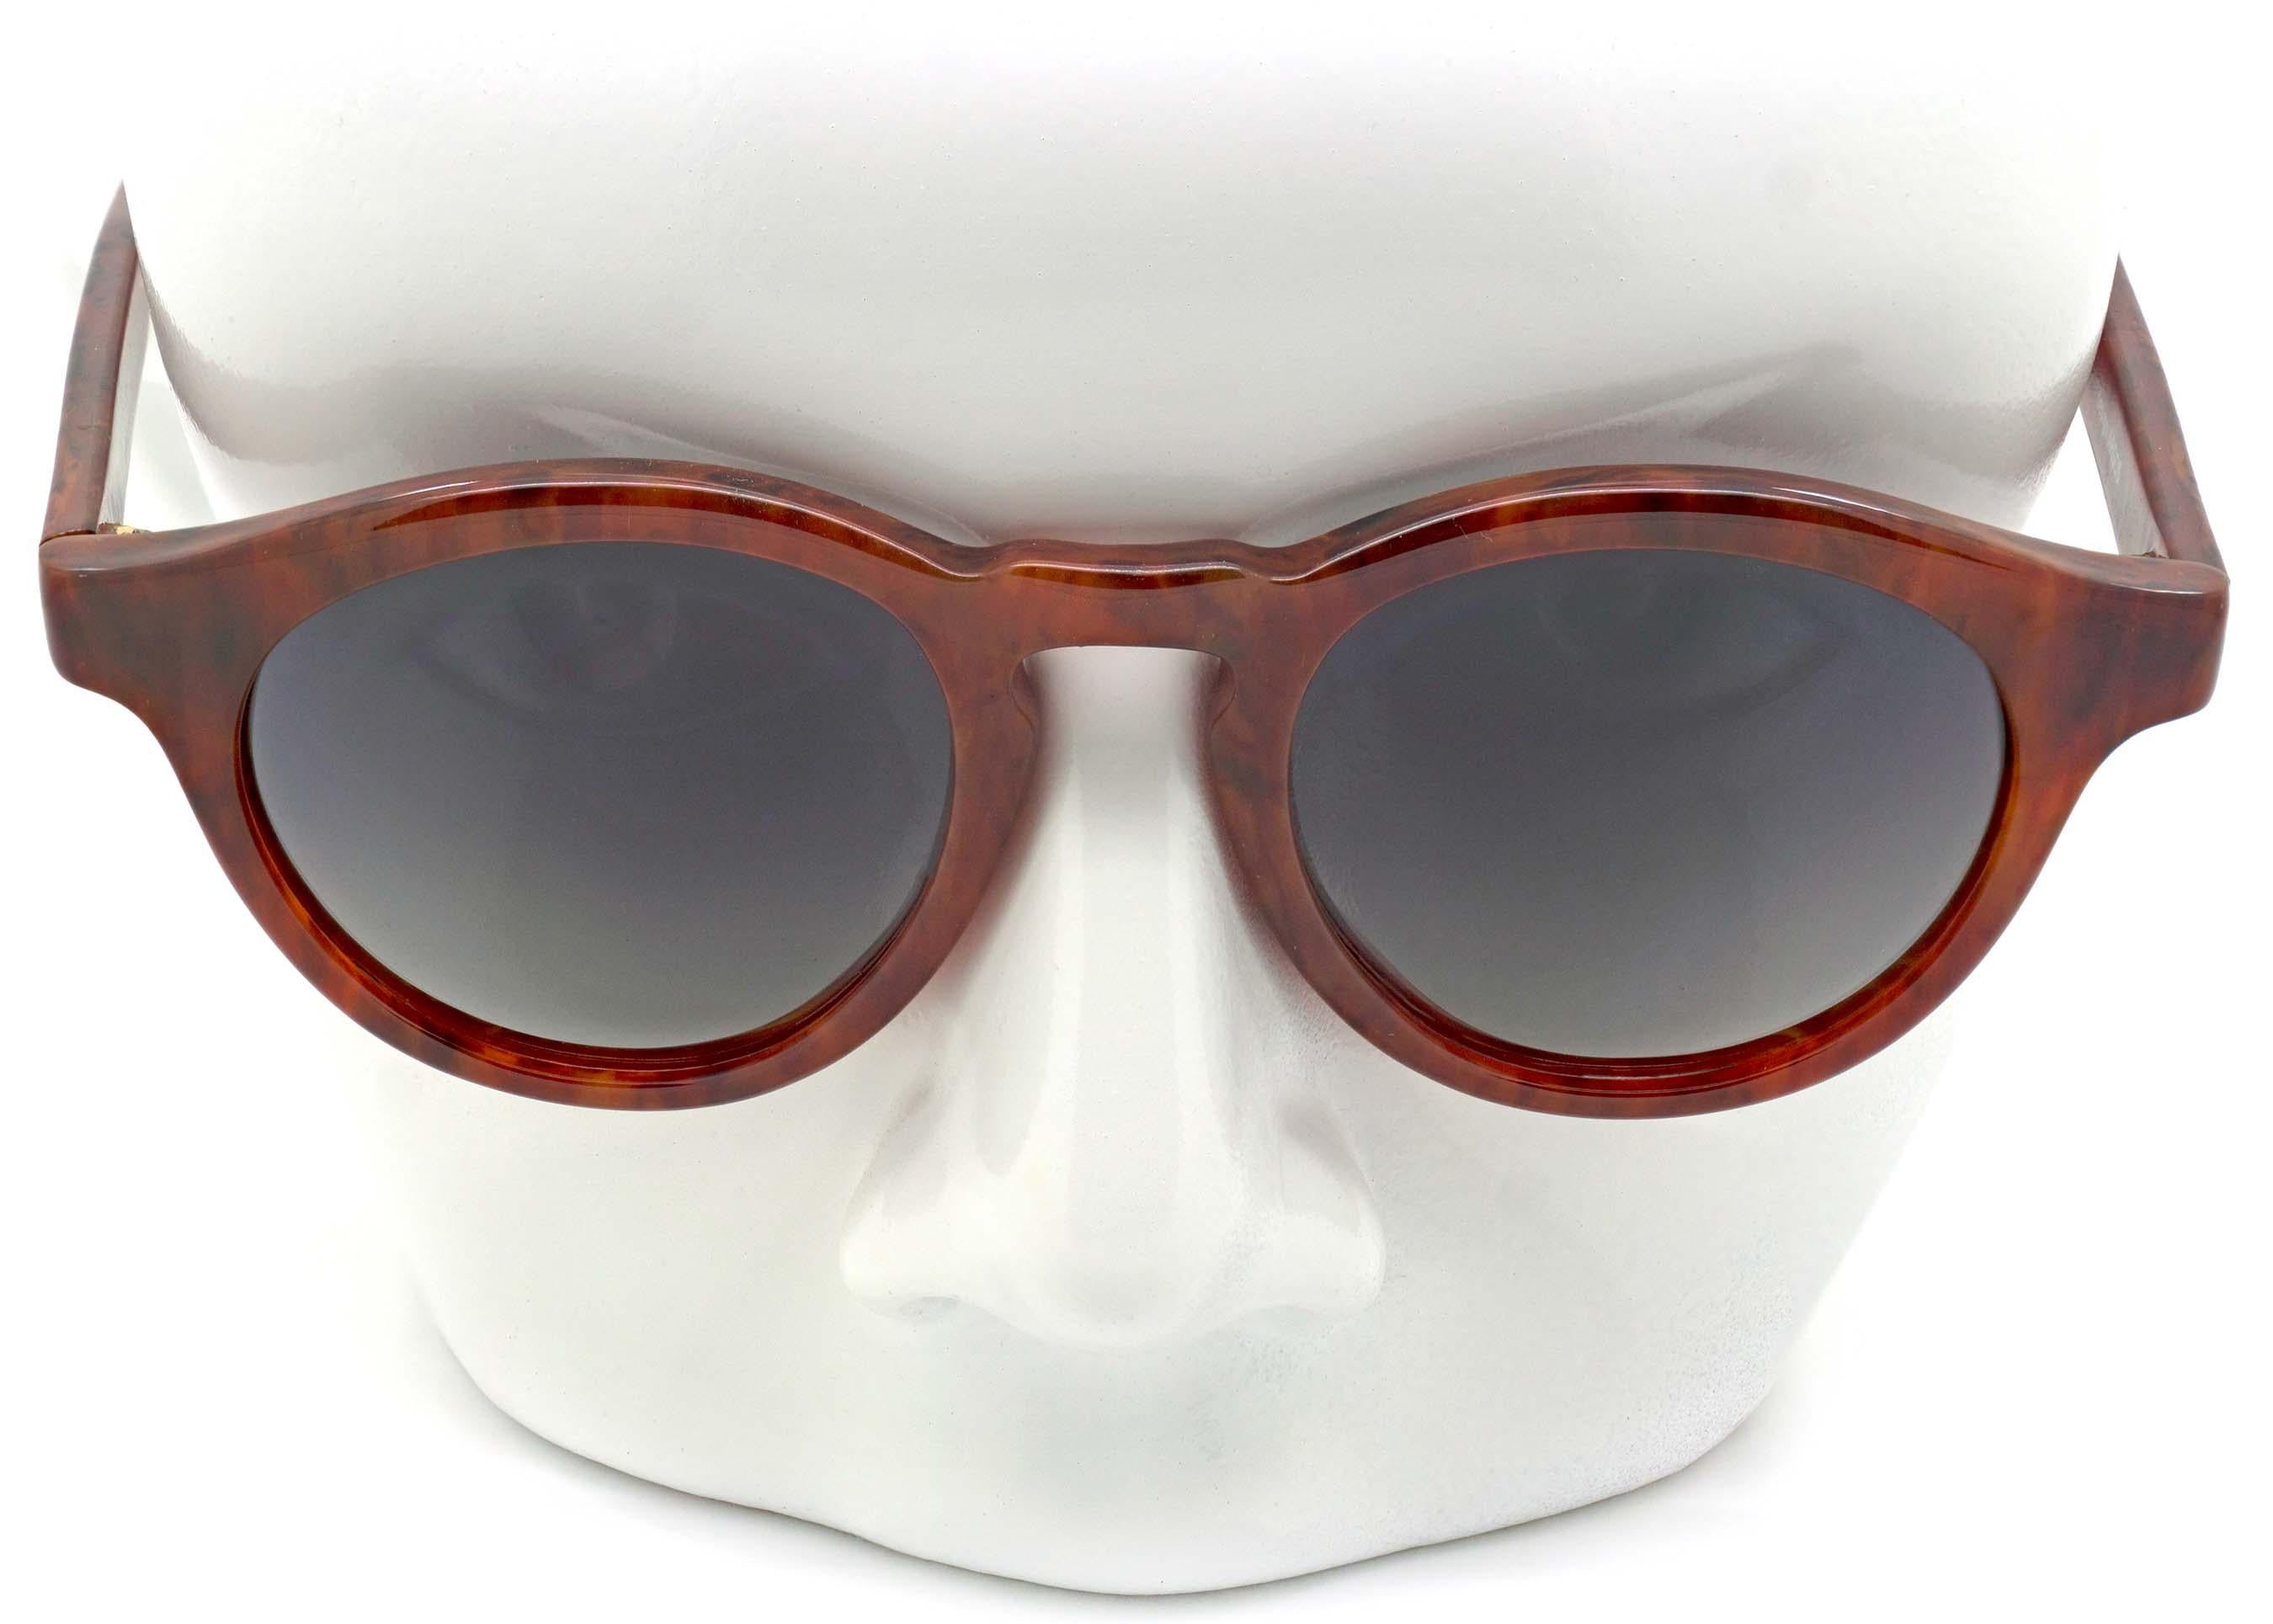 Argosol S.r.l. De Rigo vintage sunglasses, Italy 70s For Sale 1